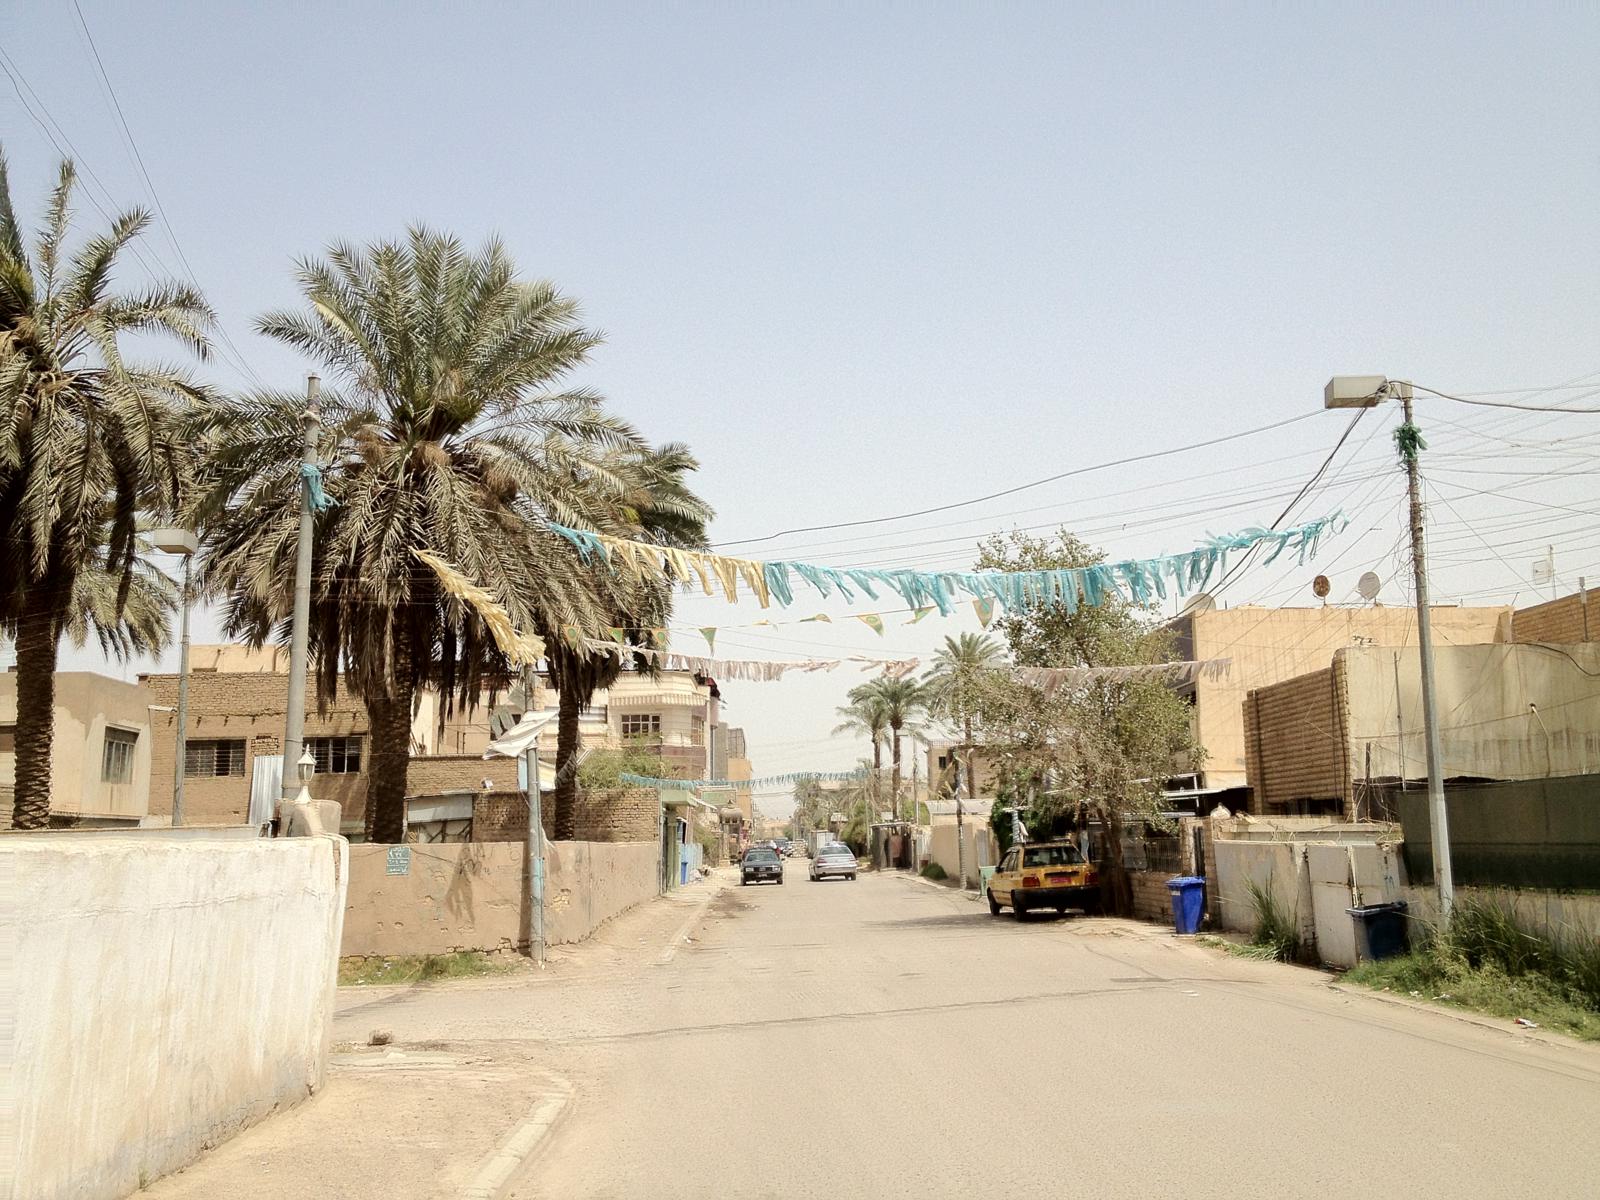 A pretty standard Baghdad street on a not dusty day.